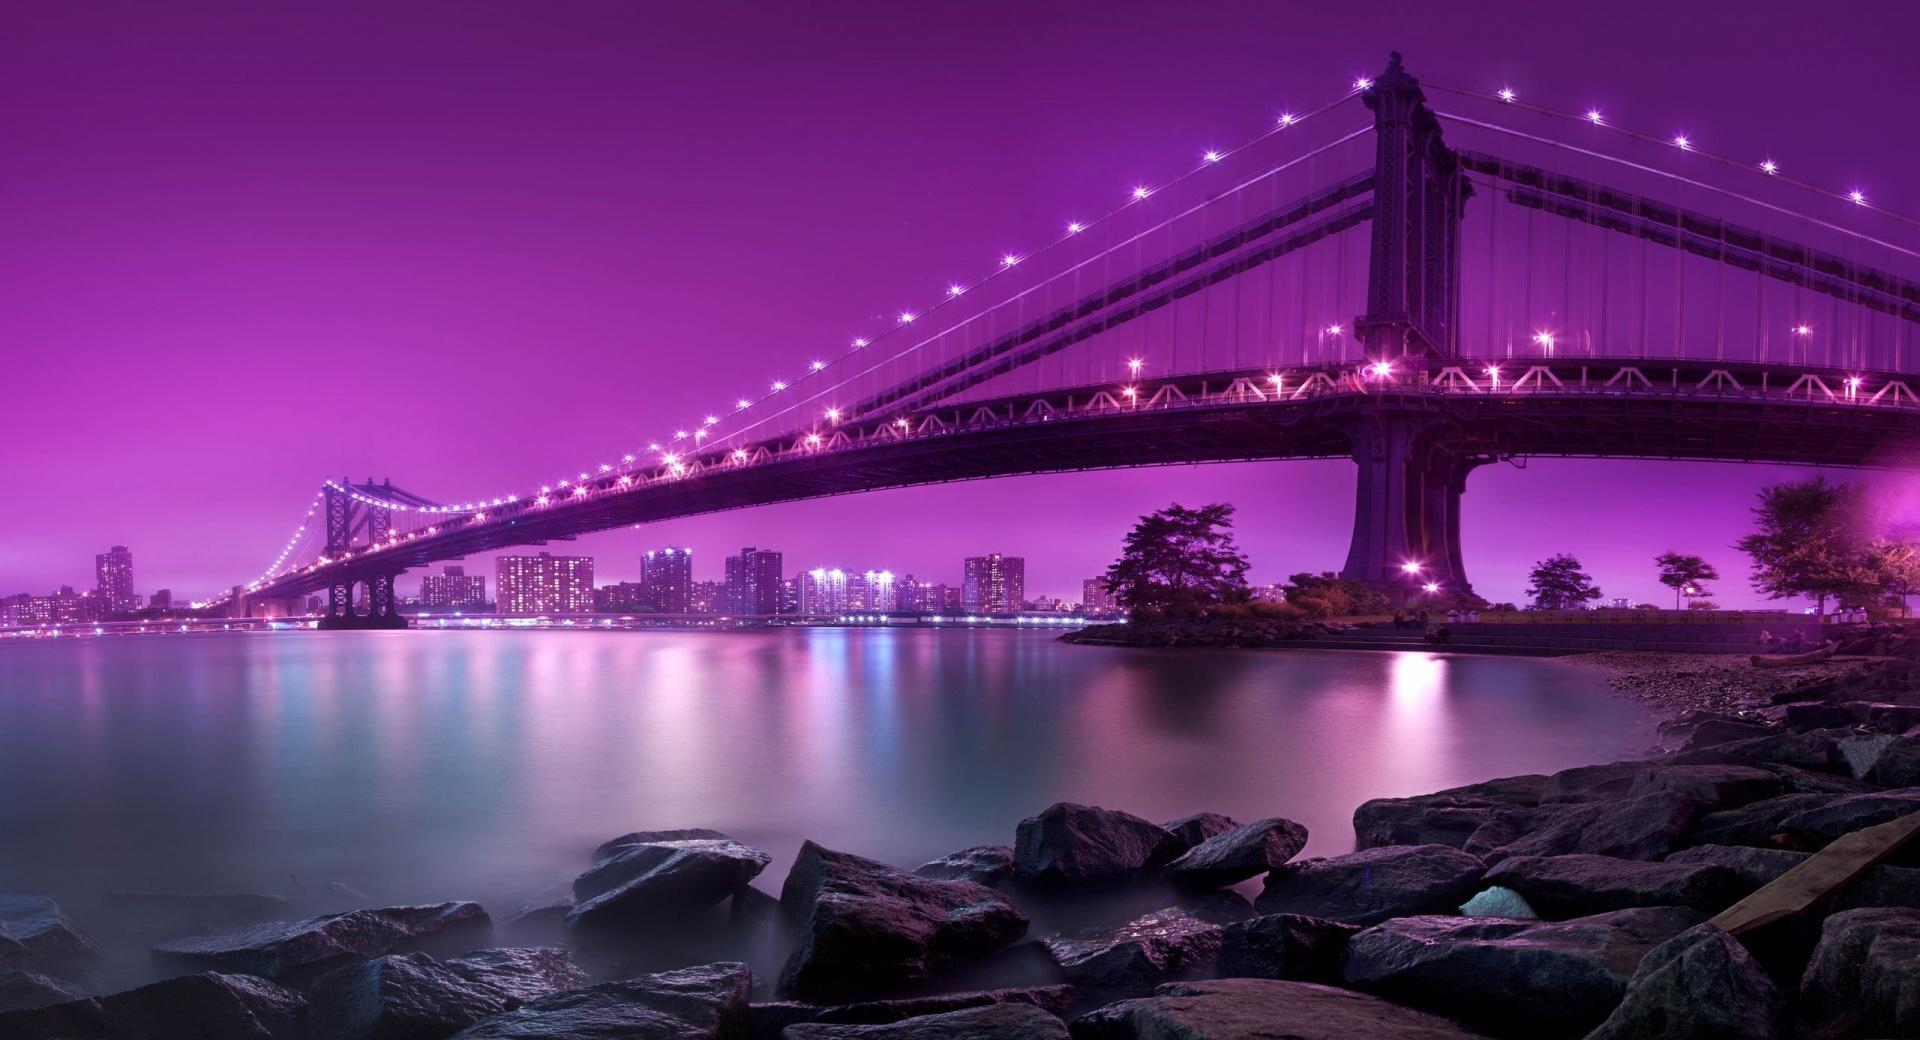 Bridge, Purple Light at 1024 x 768 size wallpapers HD quality